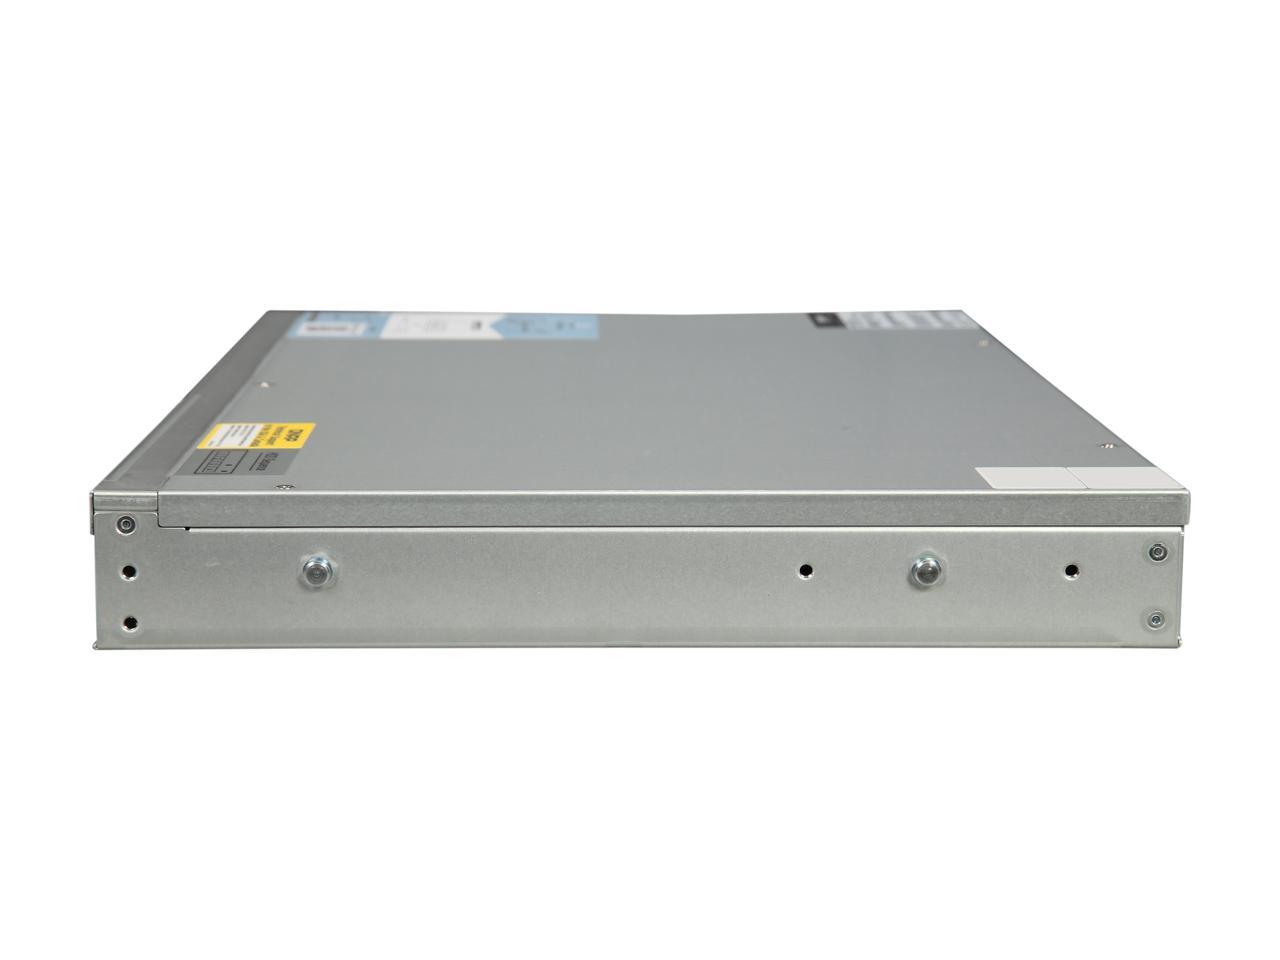 QNAP TS-431XeU-2G-US 4-bay 1U Short-Depth Rackmount NAS with Built-in 10 GbE Network